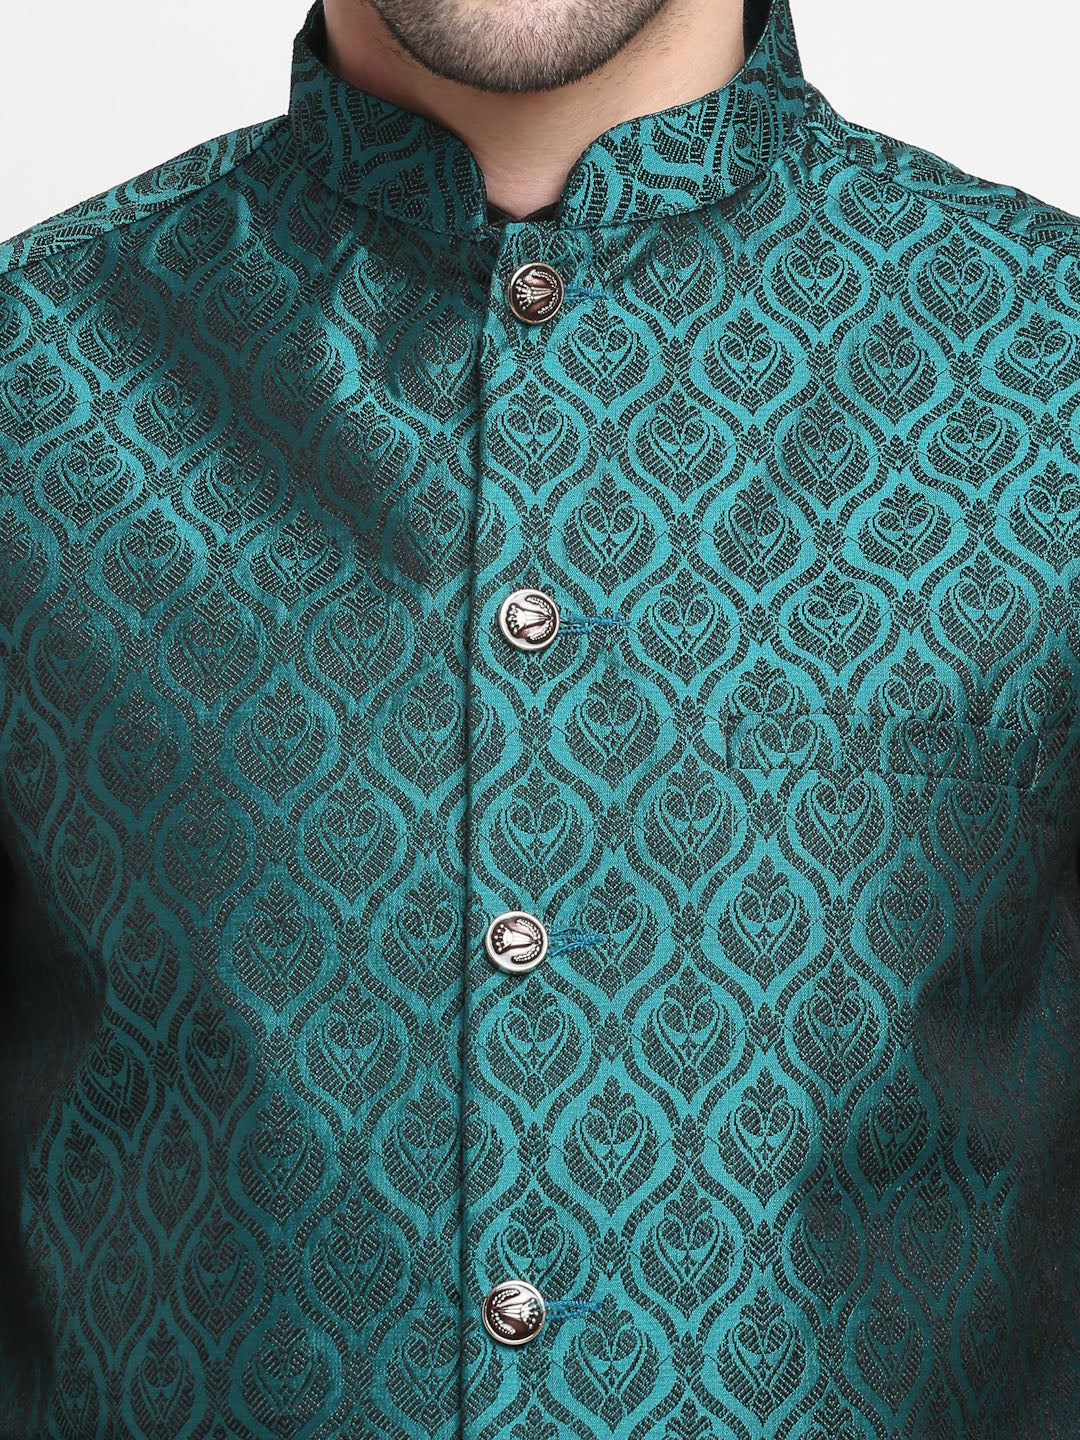 Jompers Men's Green Self-Designed Green Waistcoat